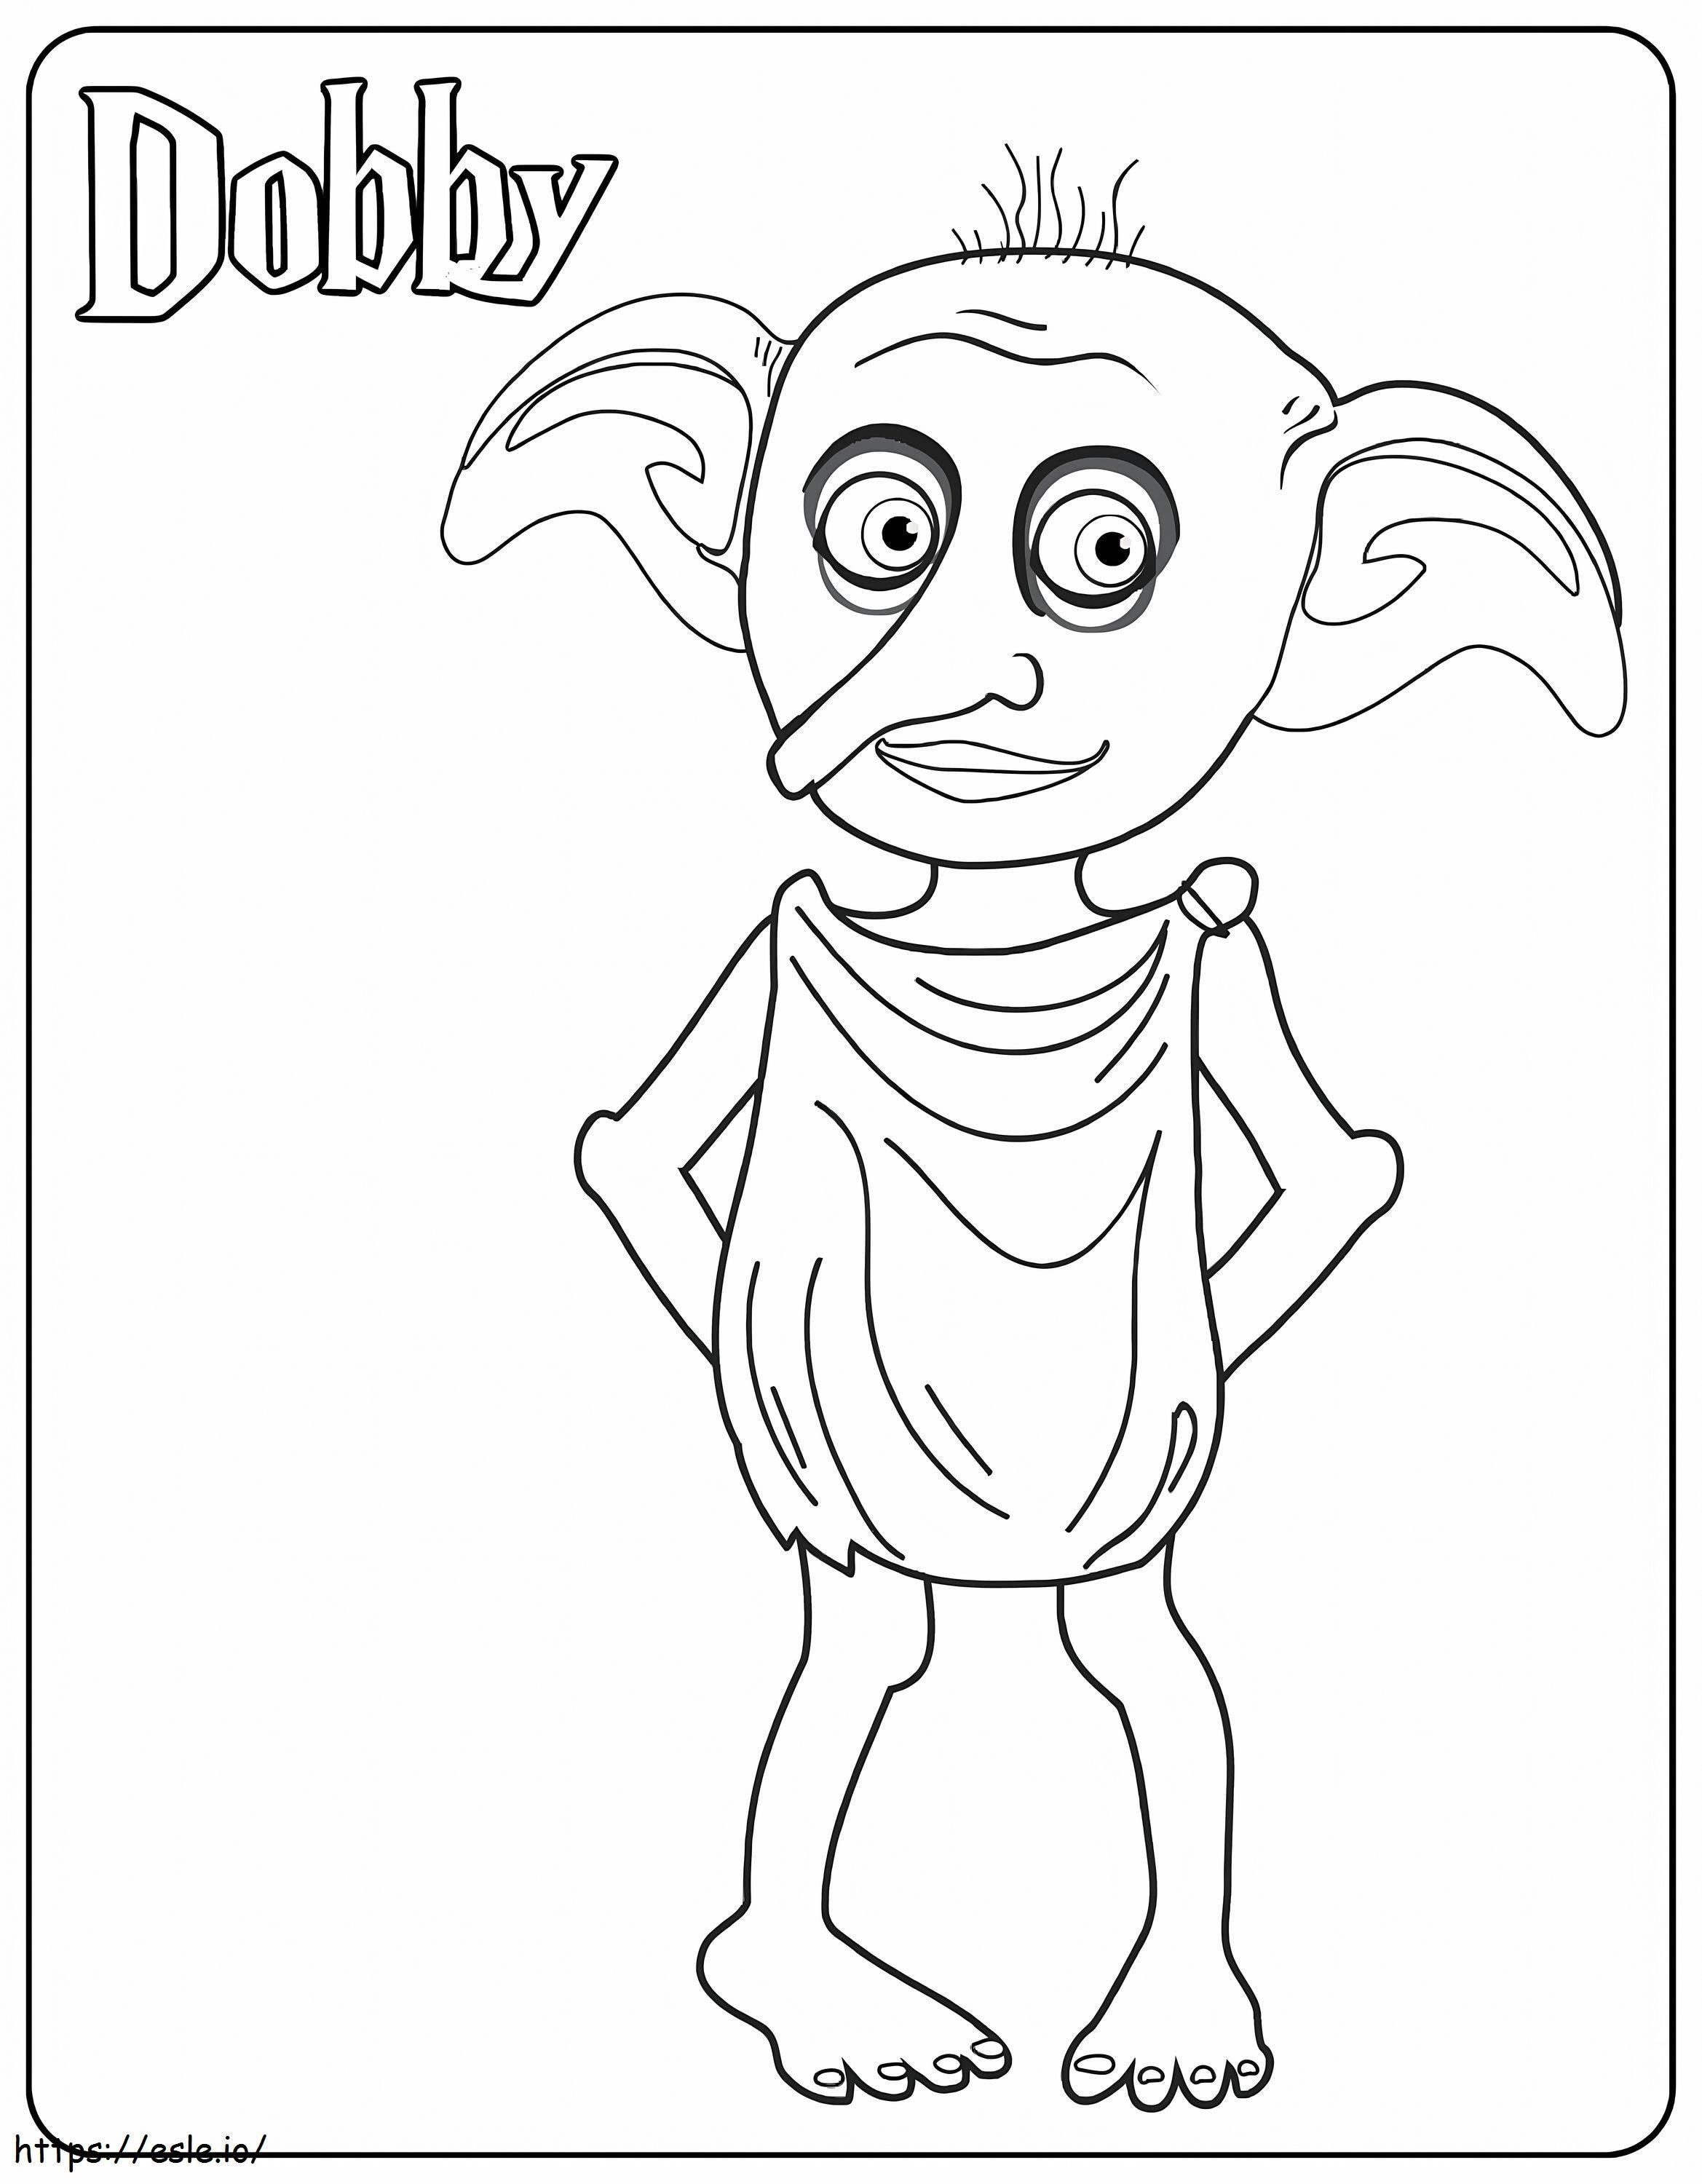 Dobby Goblin de colorat